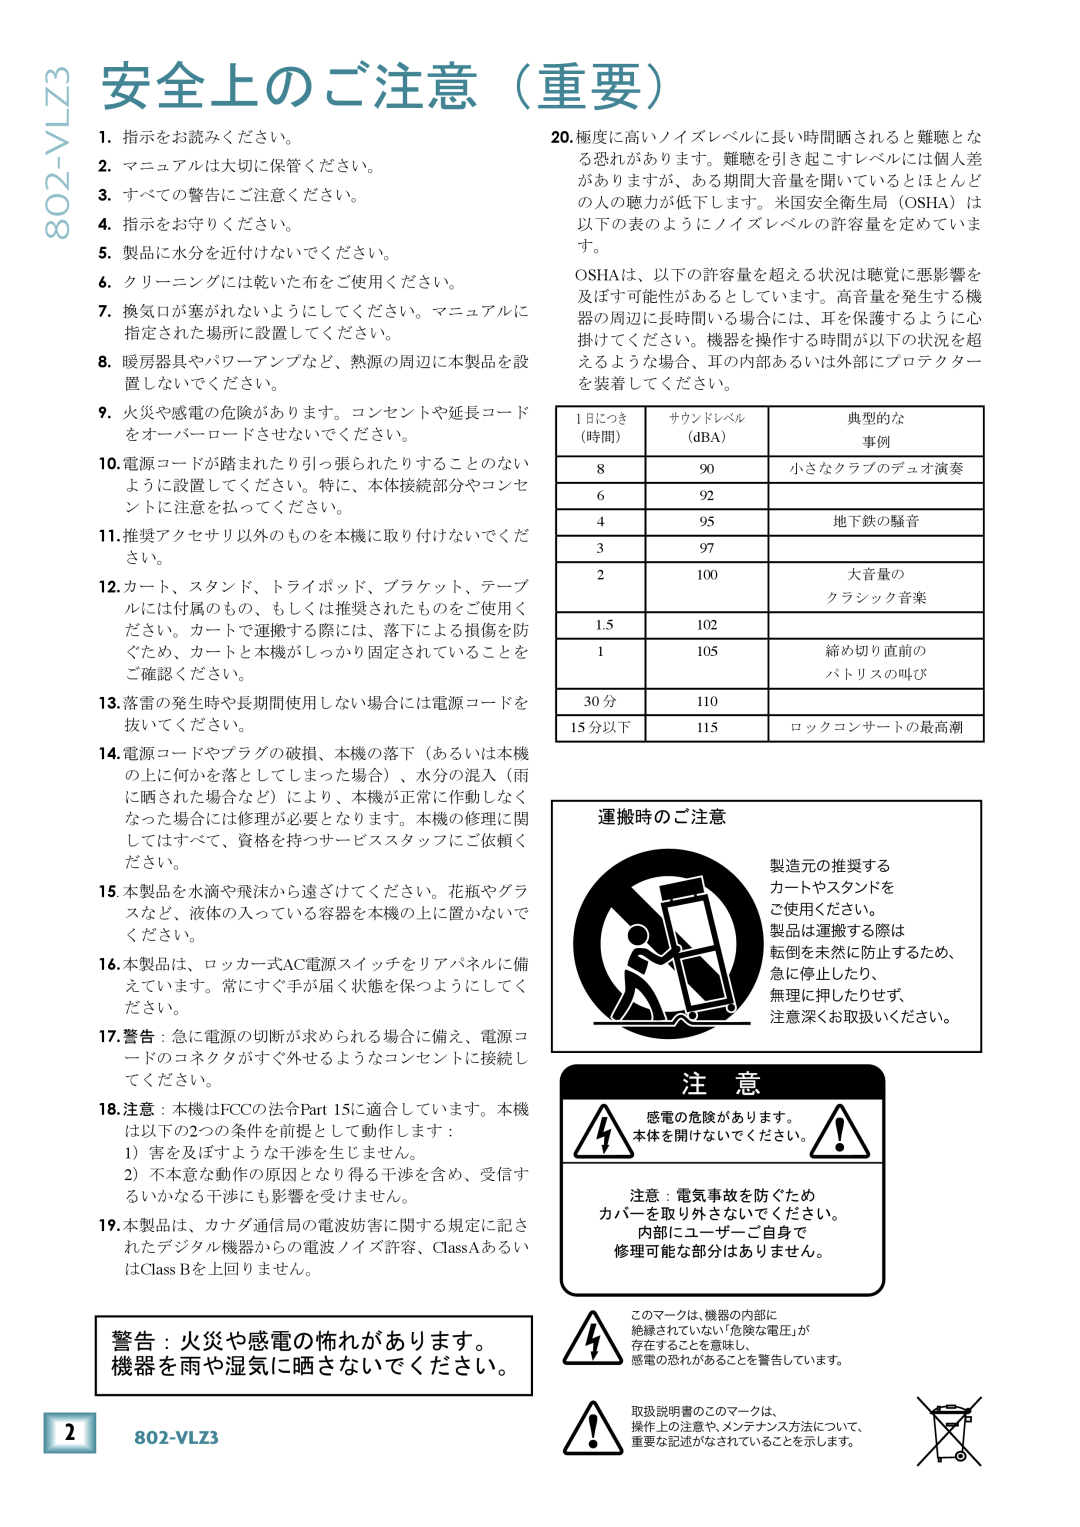 Mackie 802-VLZ3 manual 安全上のご注意（重要）, 警告：火災や感電の怖れがあります。 機器を雨や湿気に晒さないでください。, 運搬時のご注意 